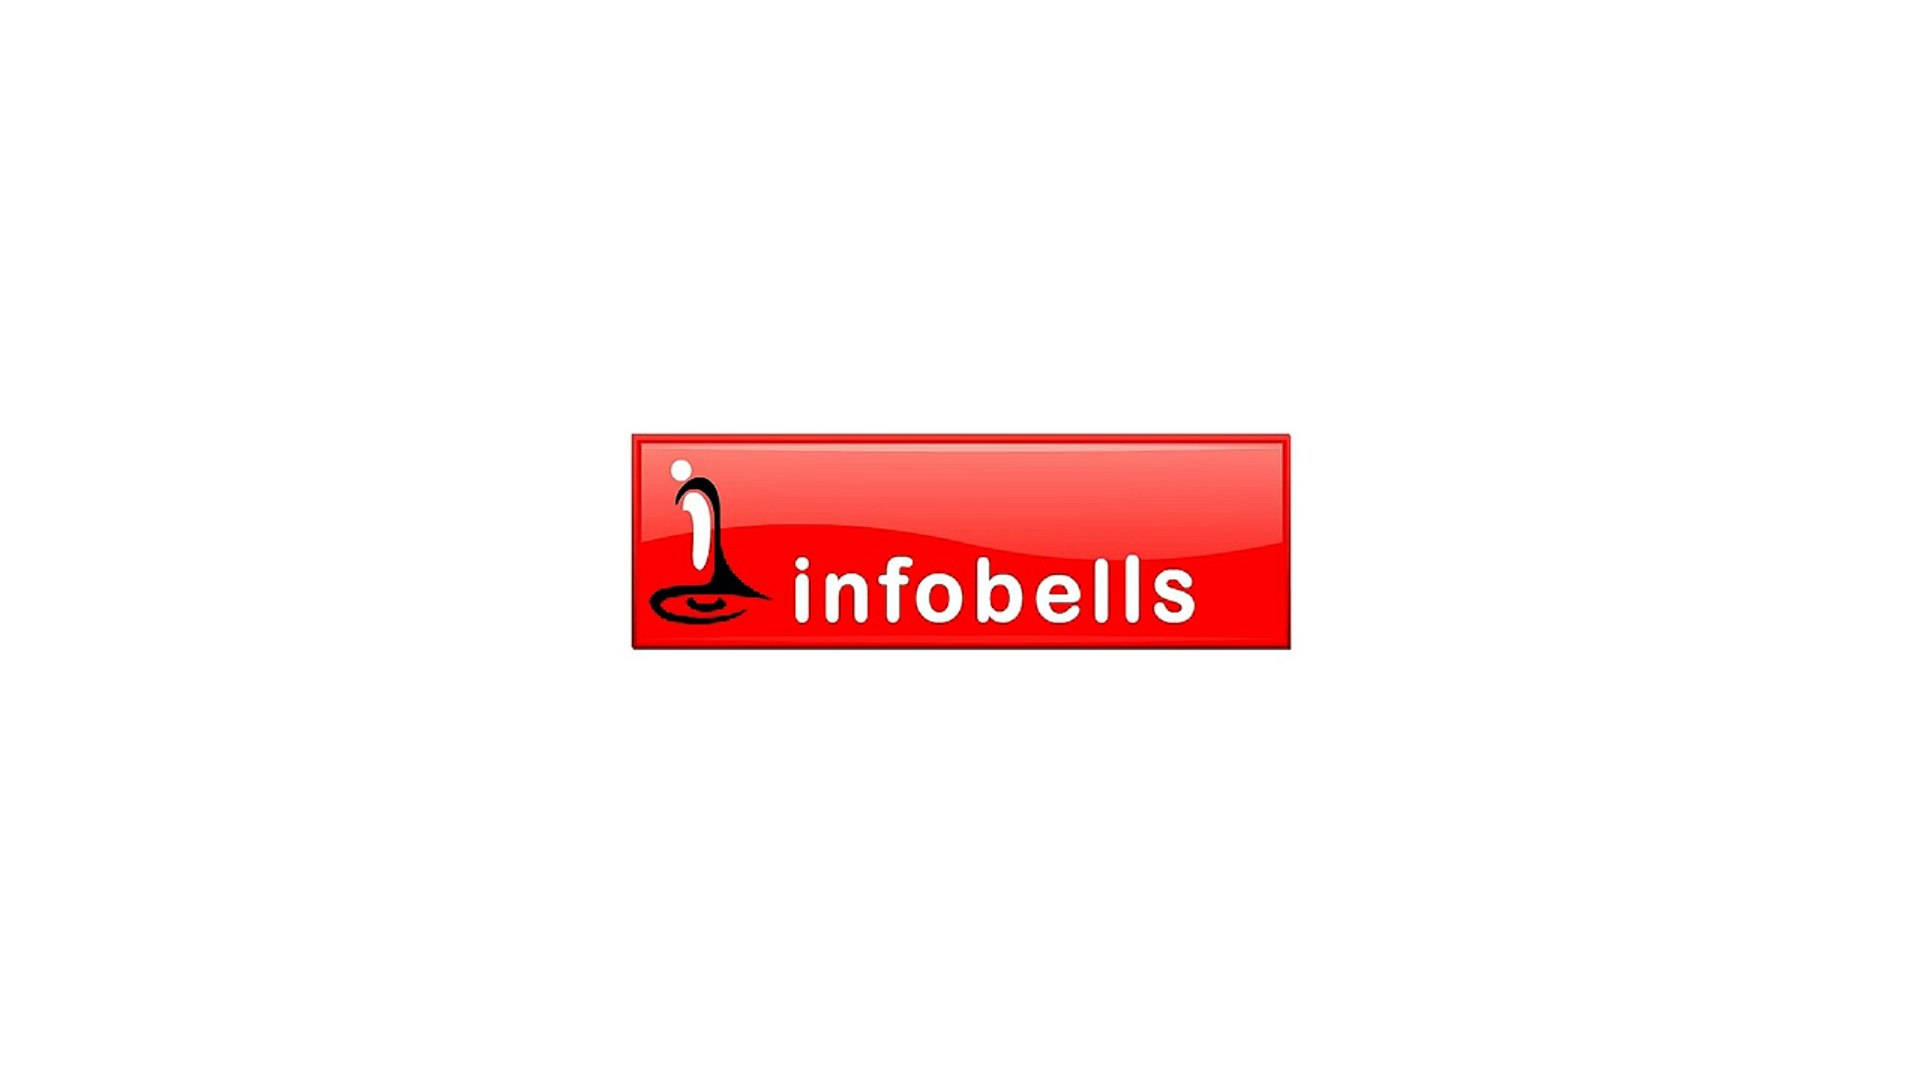 Infobells Red Logo Wallpaper